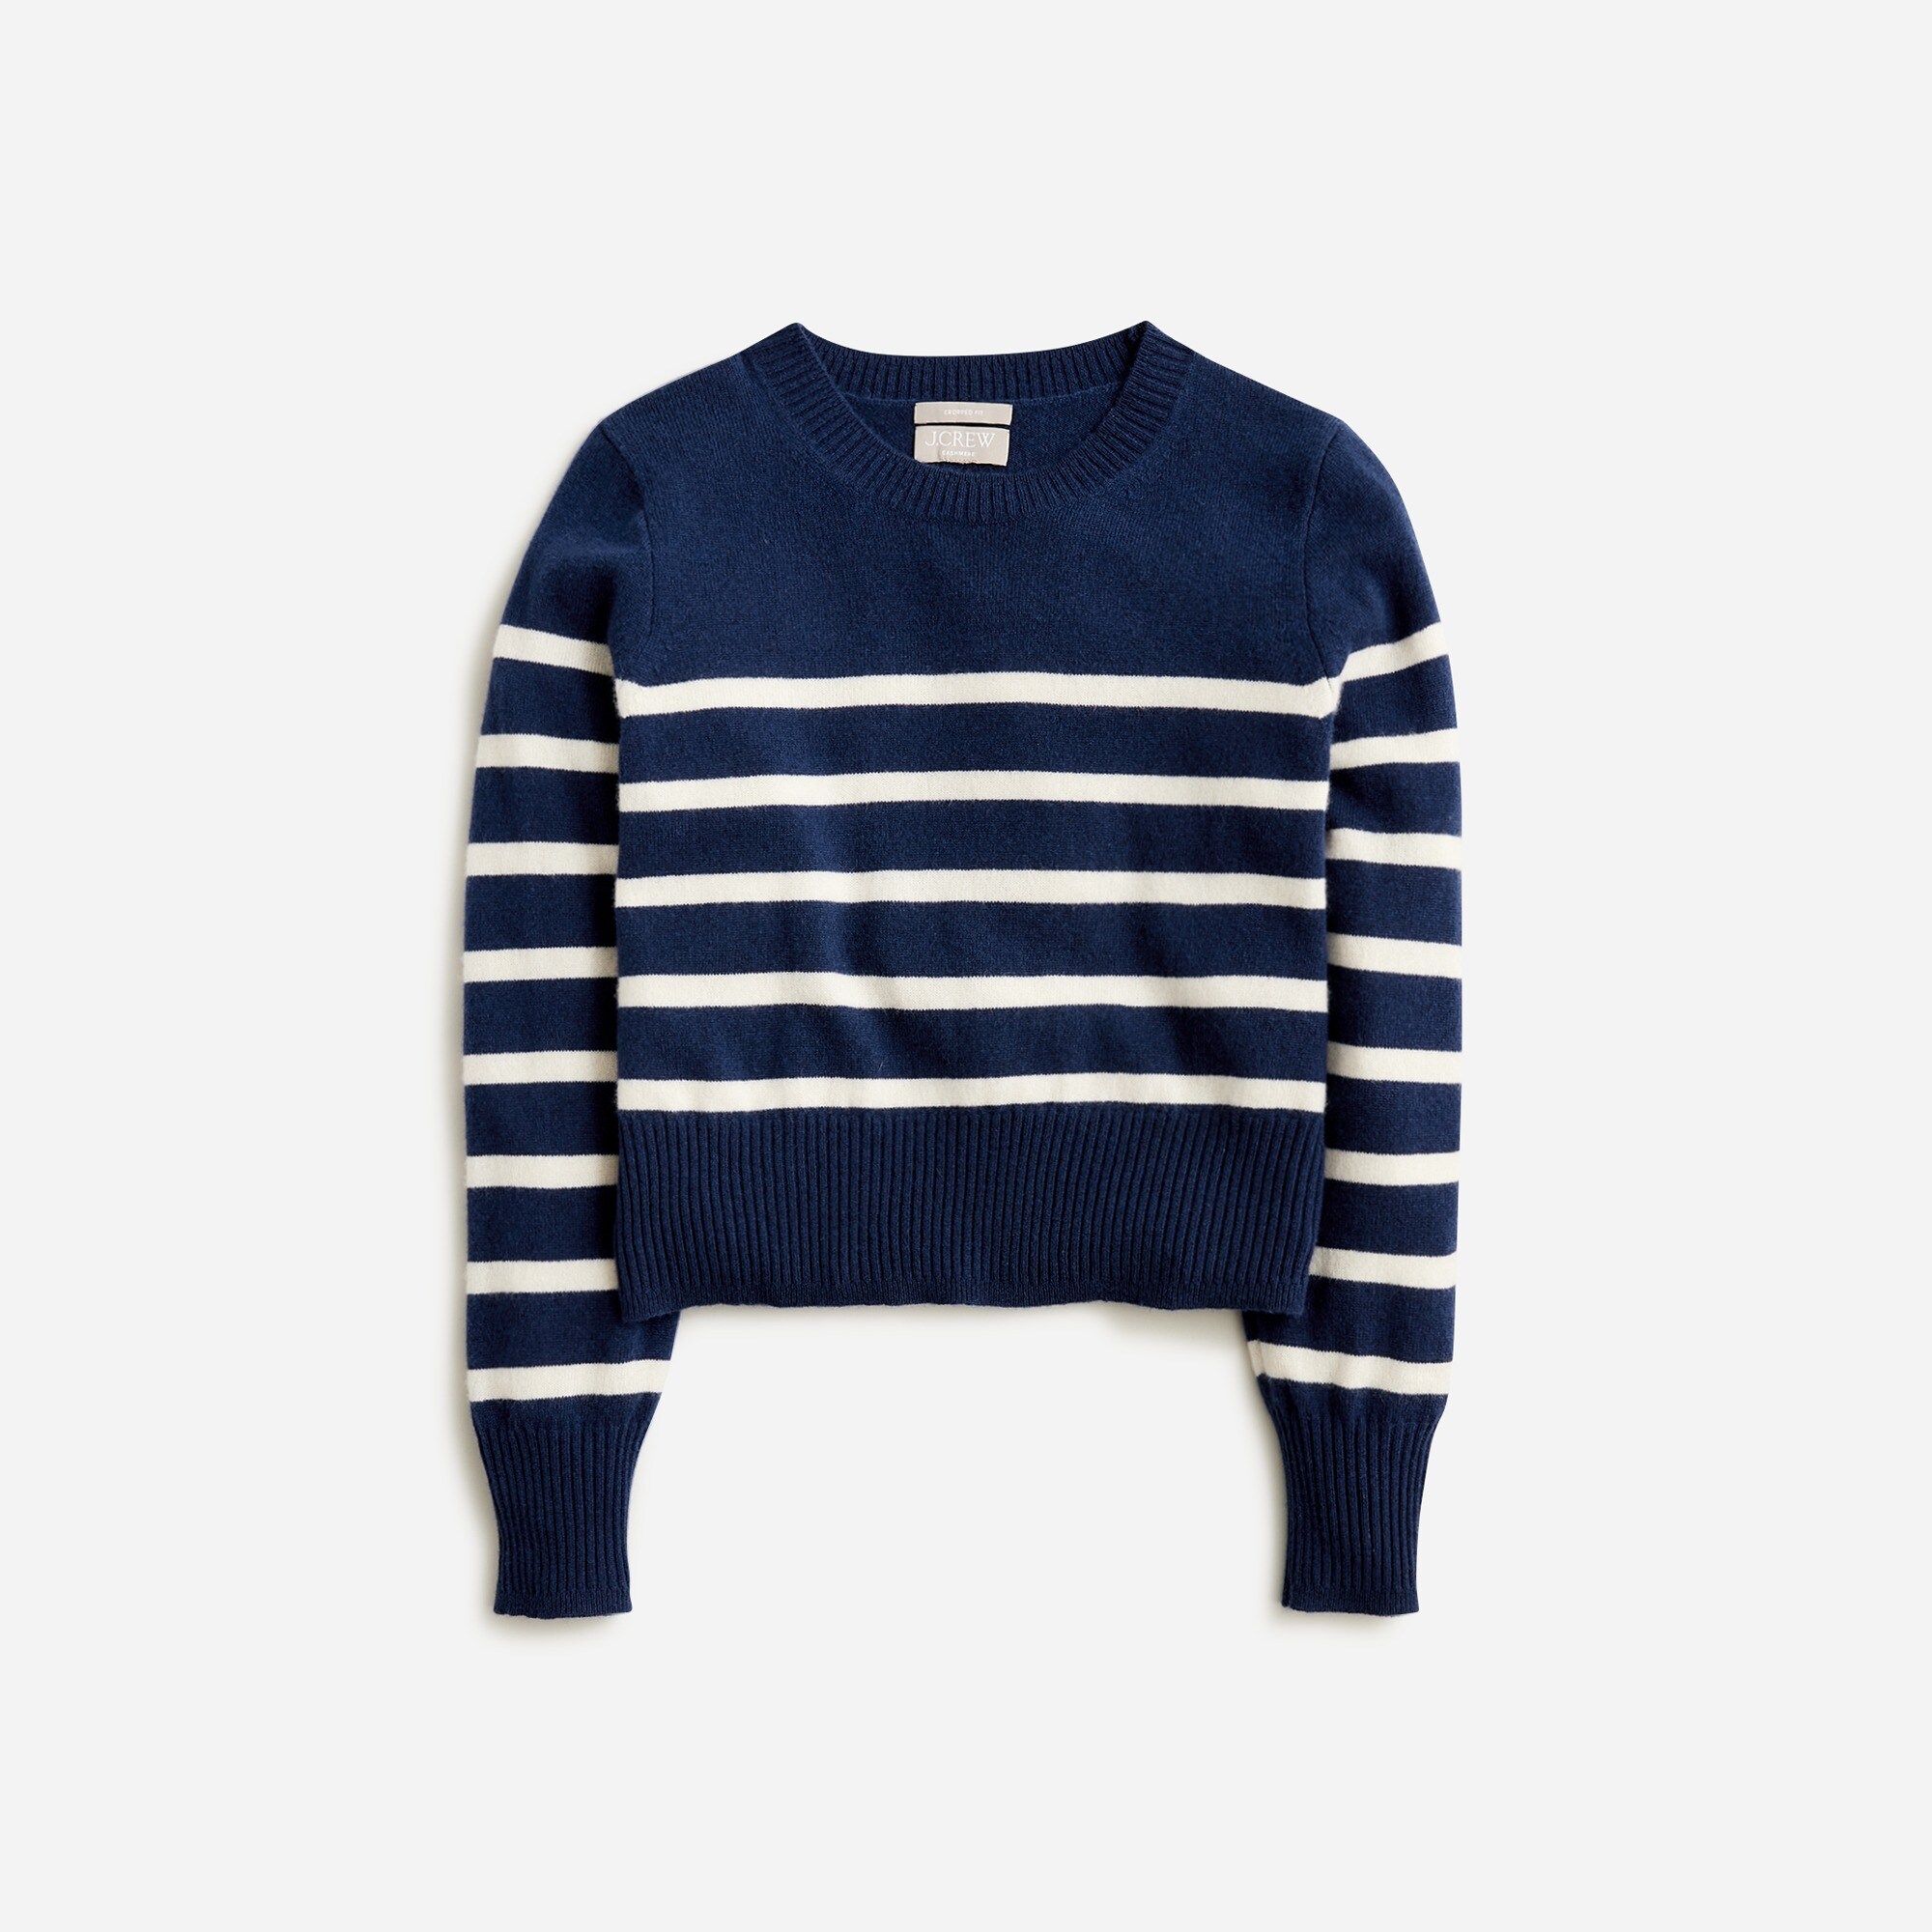  Cashmere shrunken crewneck sweater in stripe